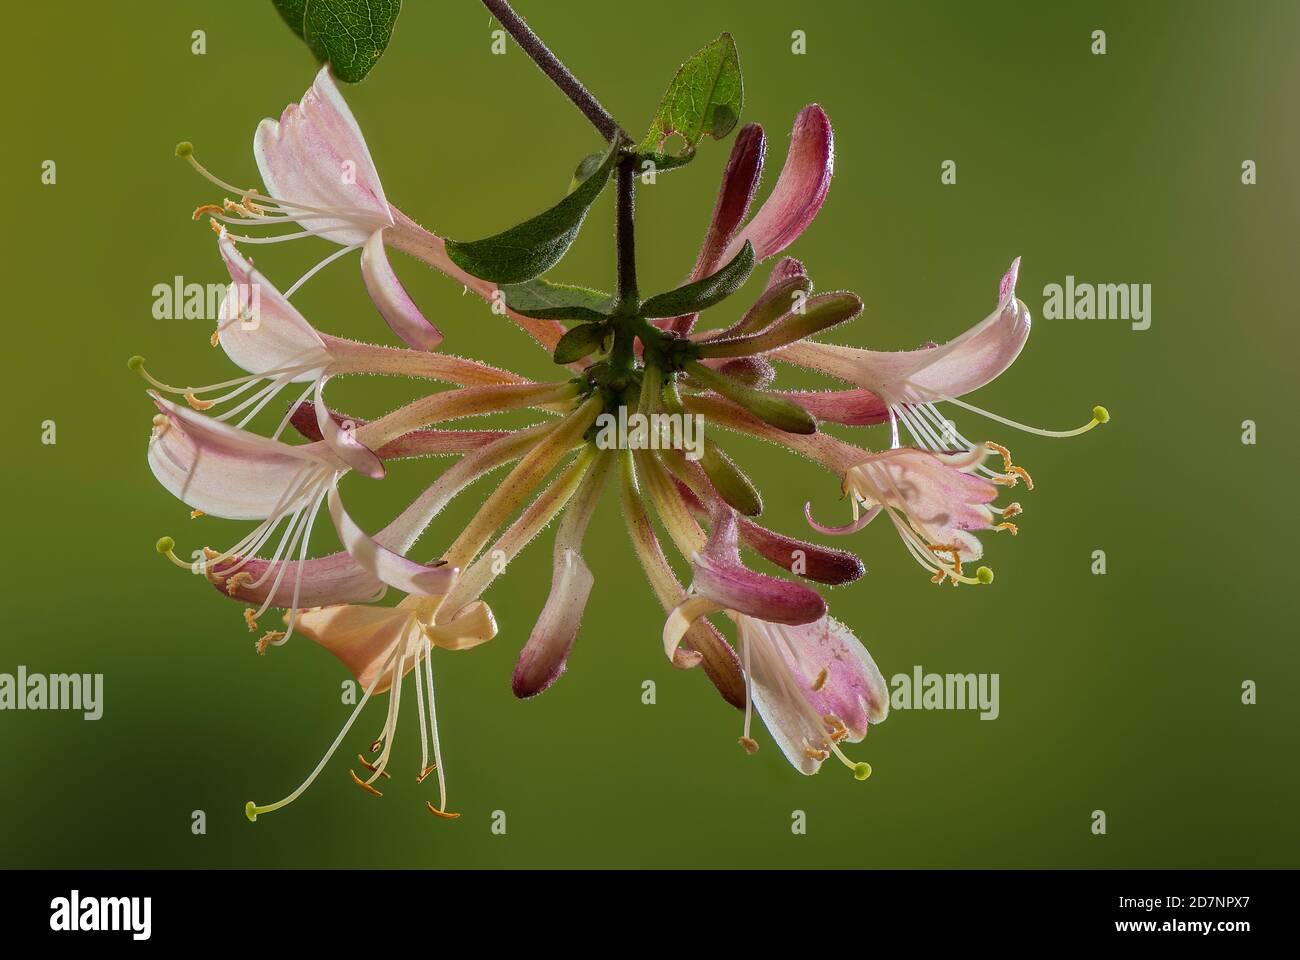 Honeysuckle, Lonicera periclymenum, in fiore; profumato scalatore a fioritura estiva. Foto Stock